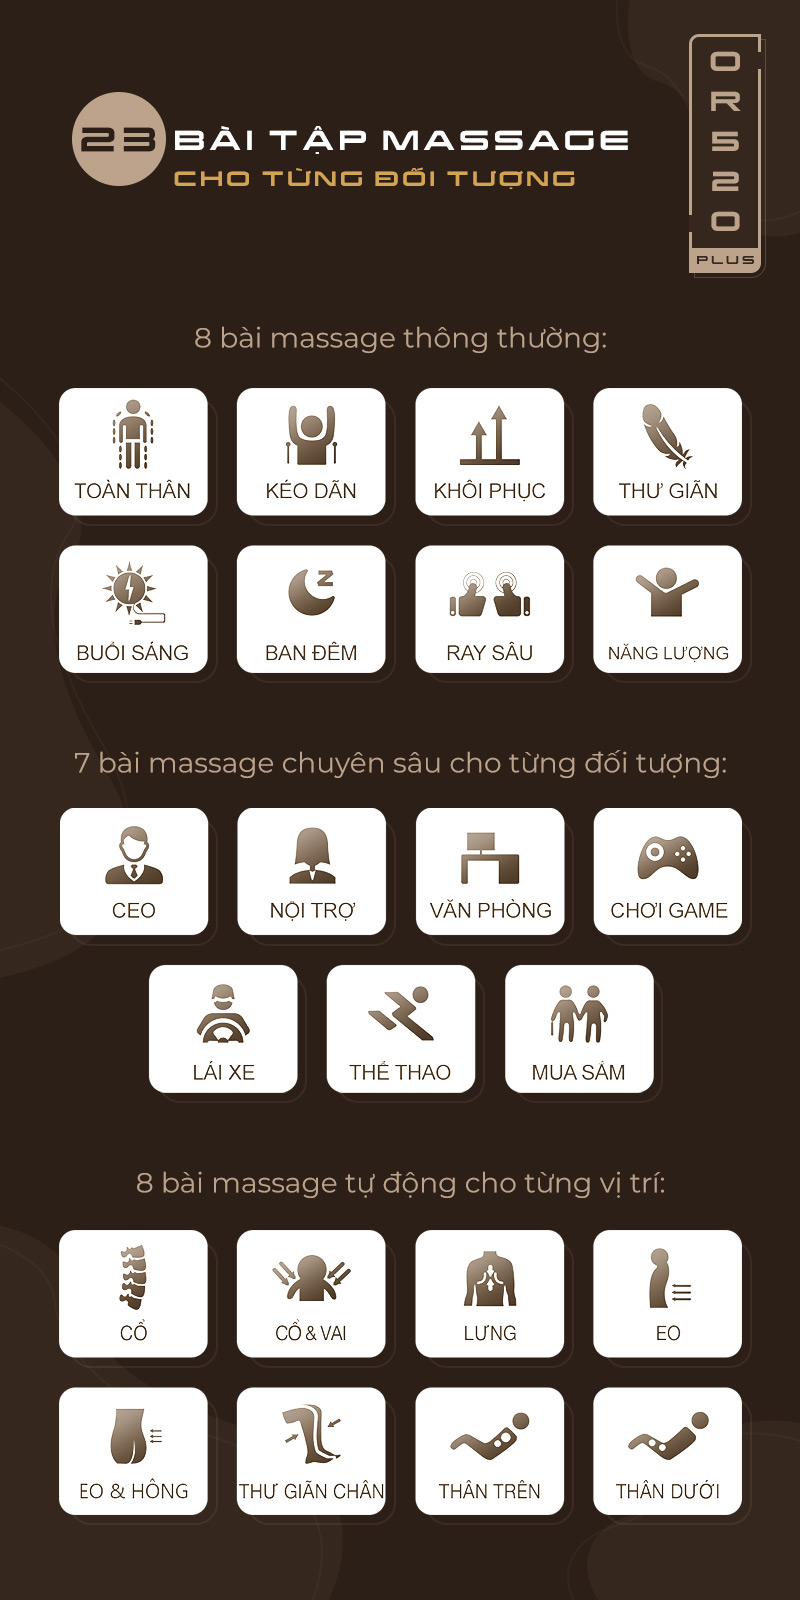 Ghế massage Oreni OR-520 Plus với 23 bài tập massage